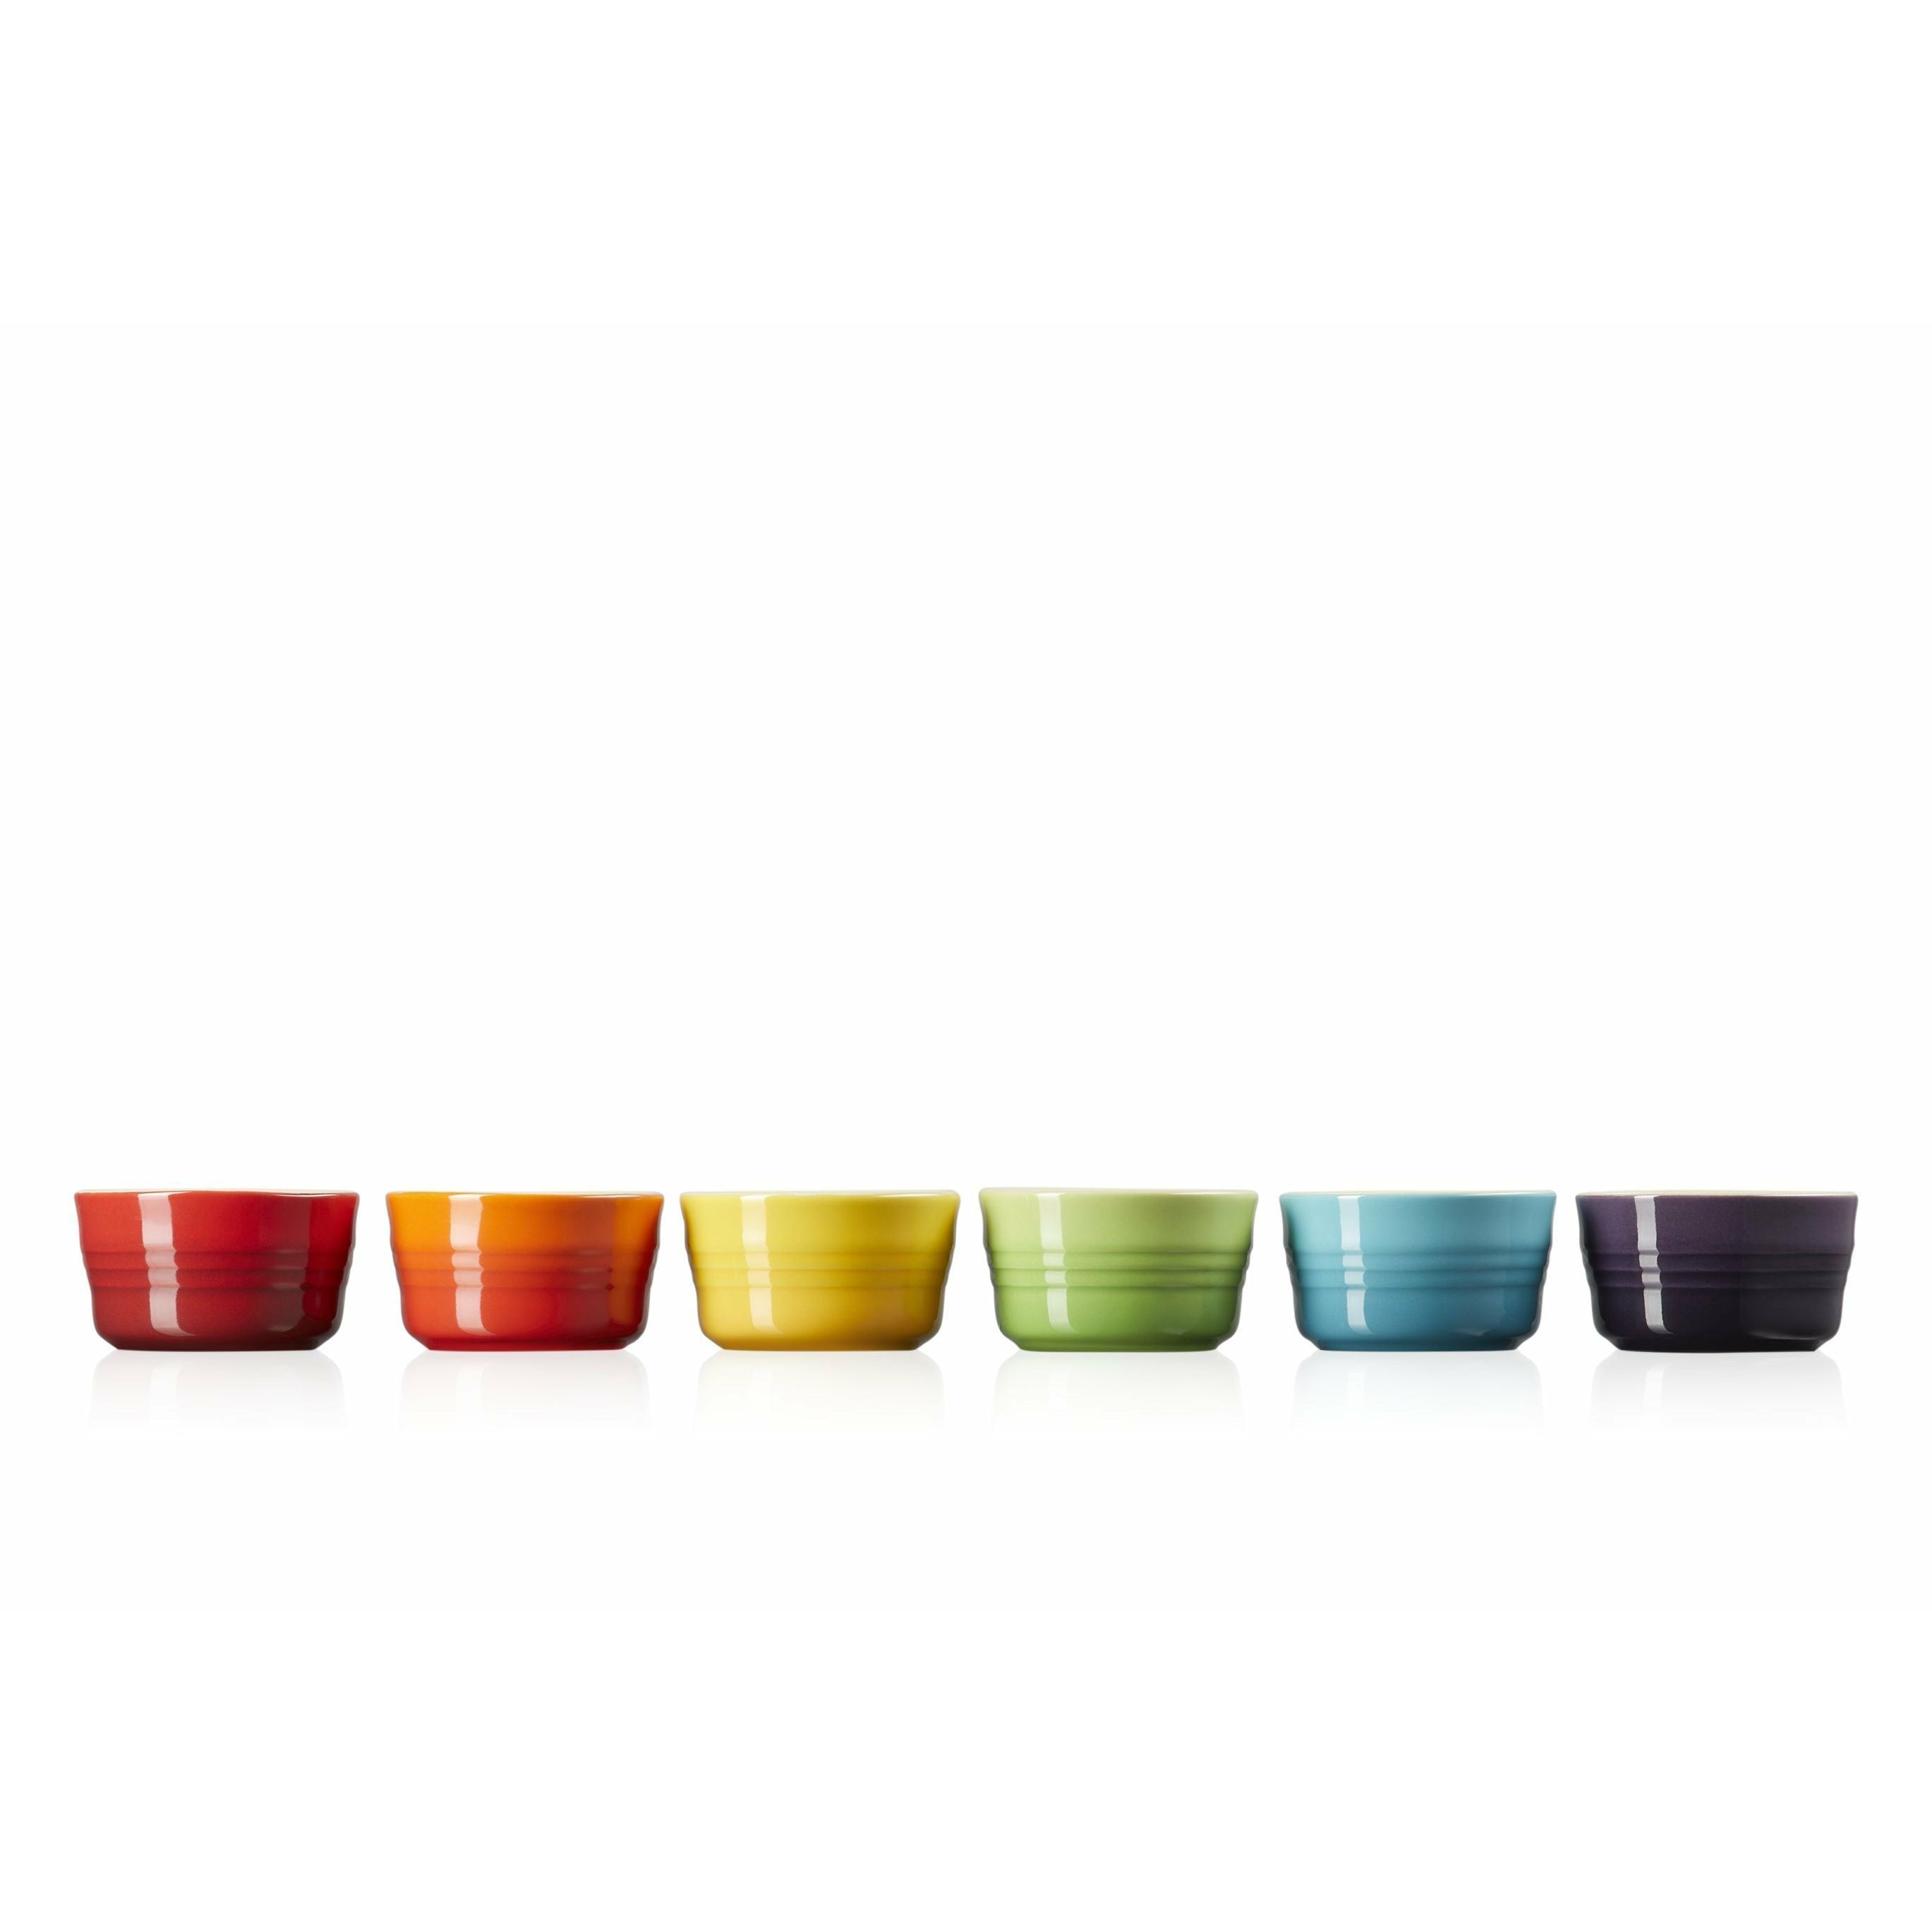 Le Creuset Rainbow Collection Sæt med 6 Mini Ramekiner, Farverig